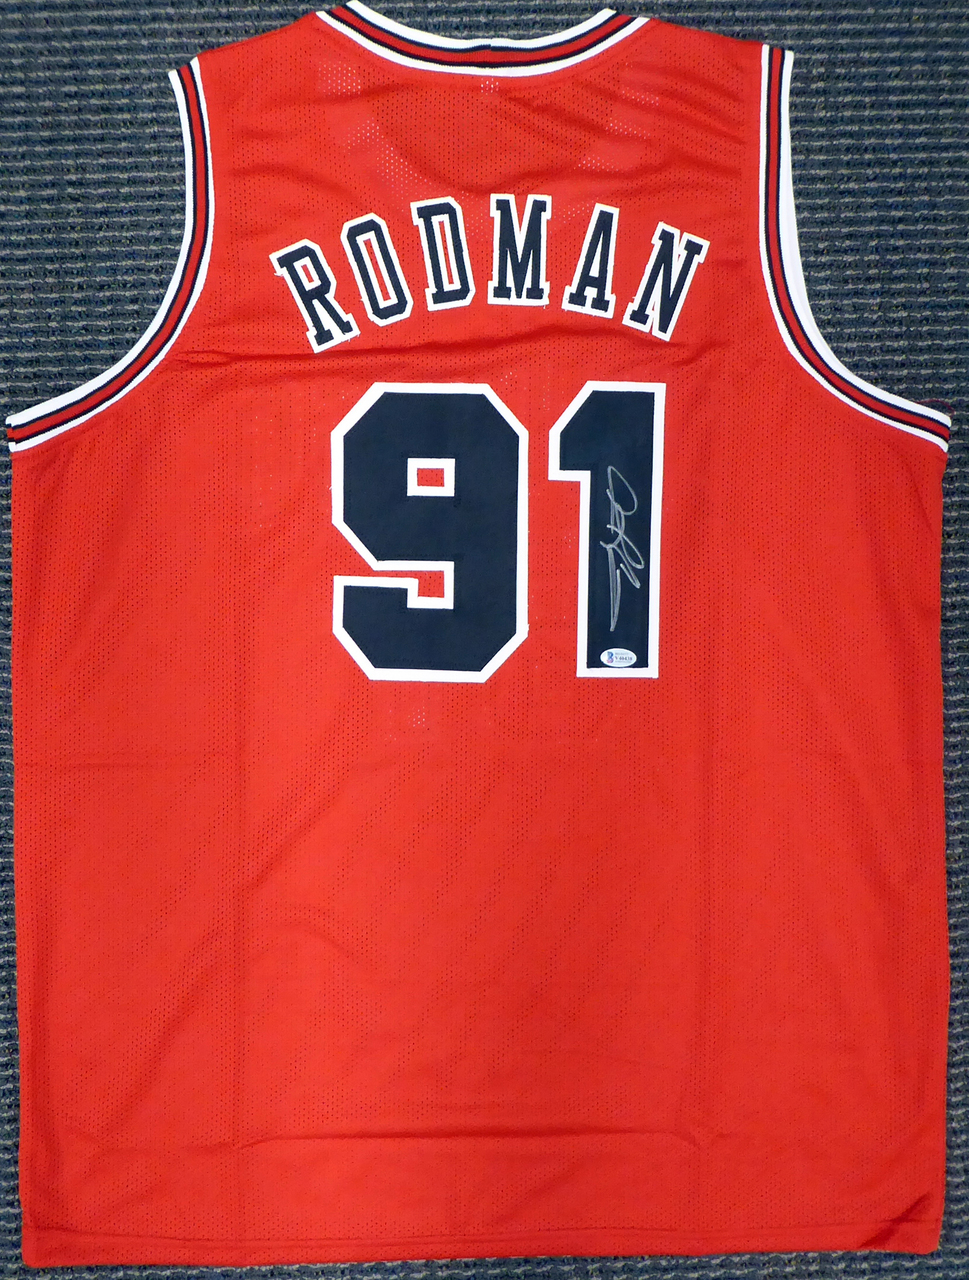 Chicago Bulls Dennis Rodman Signed Red Throwback Jersey - Schwartz  Authenticated